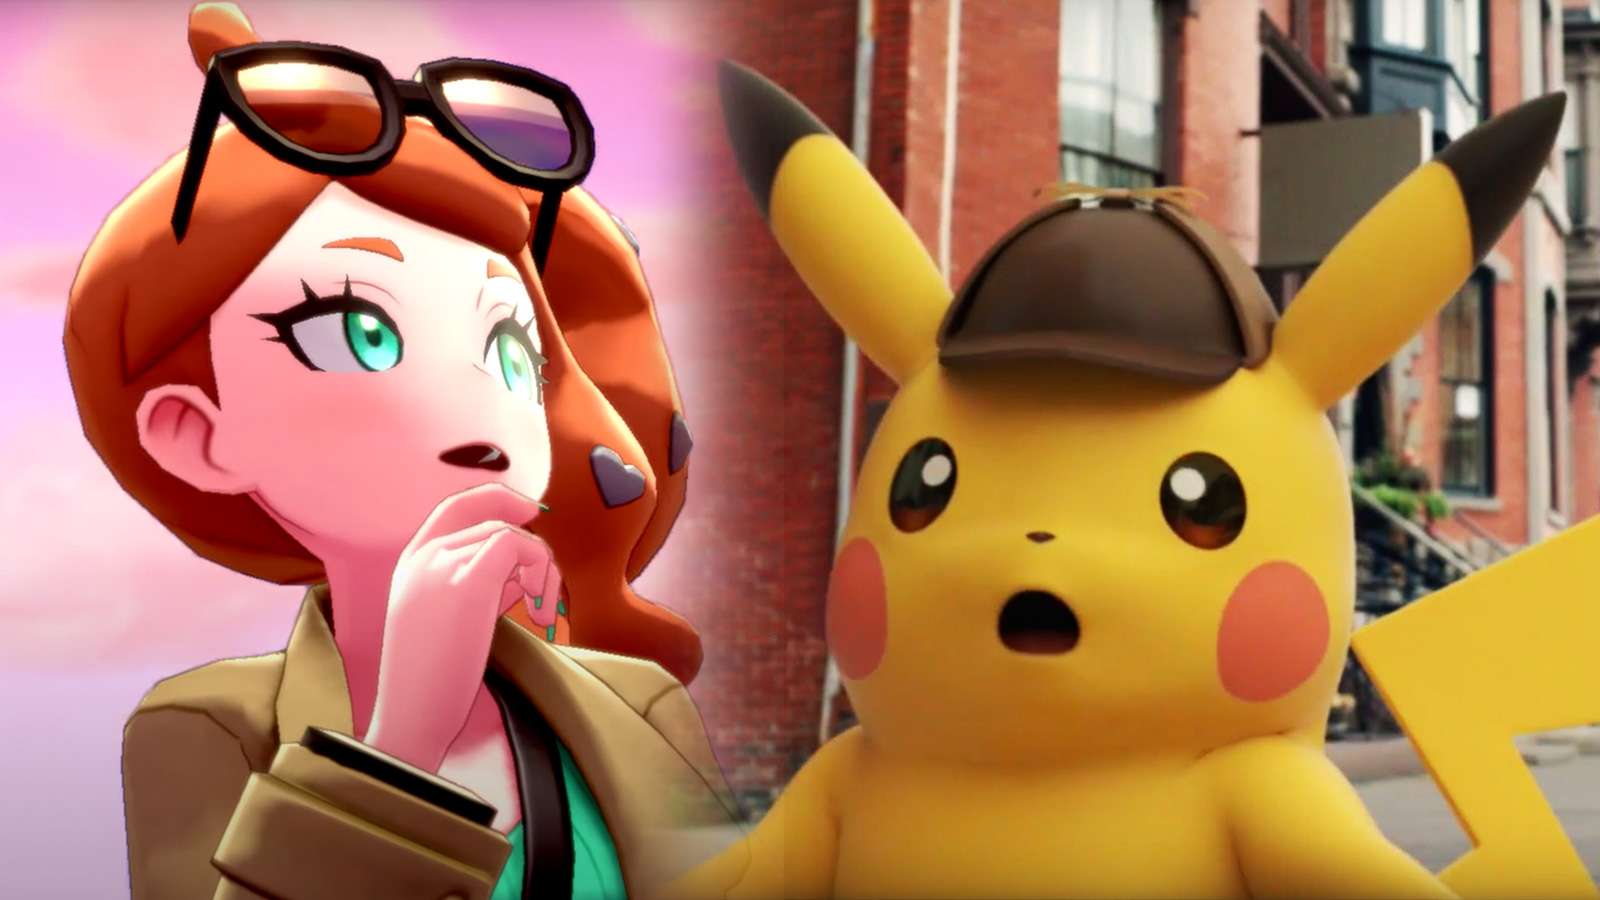 Screenshot of Sonia from Pokemon Sword & Shield next to Detective Pikachu.